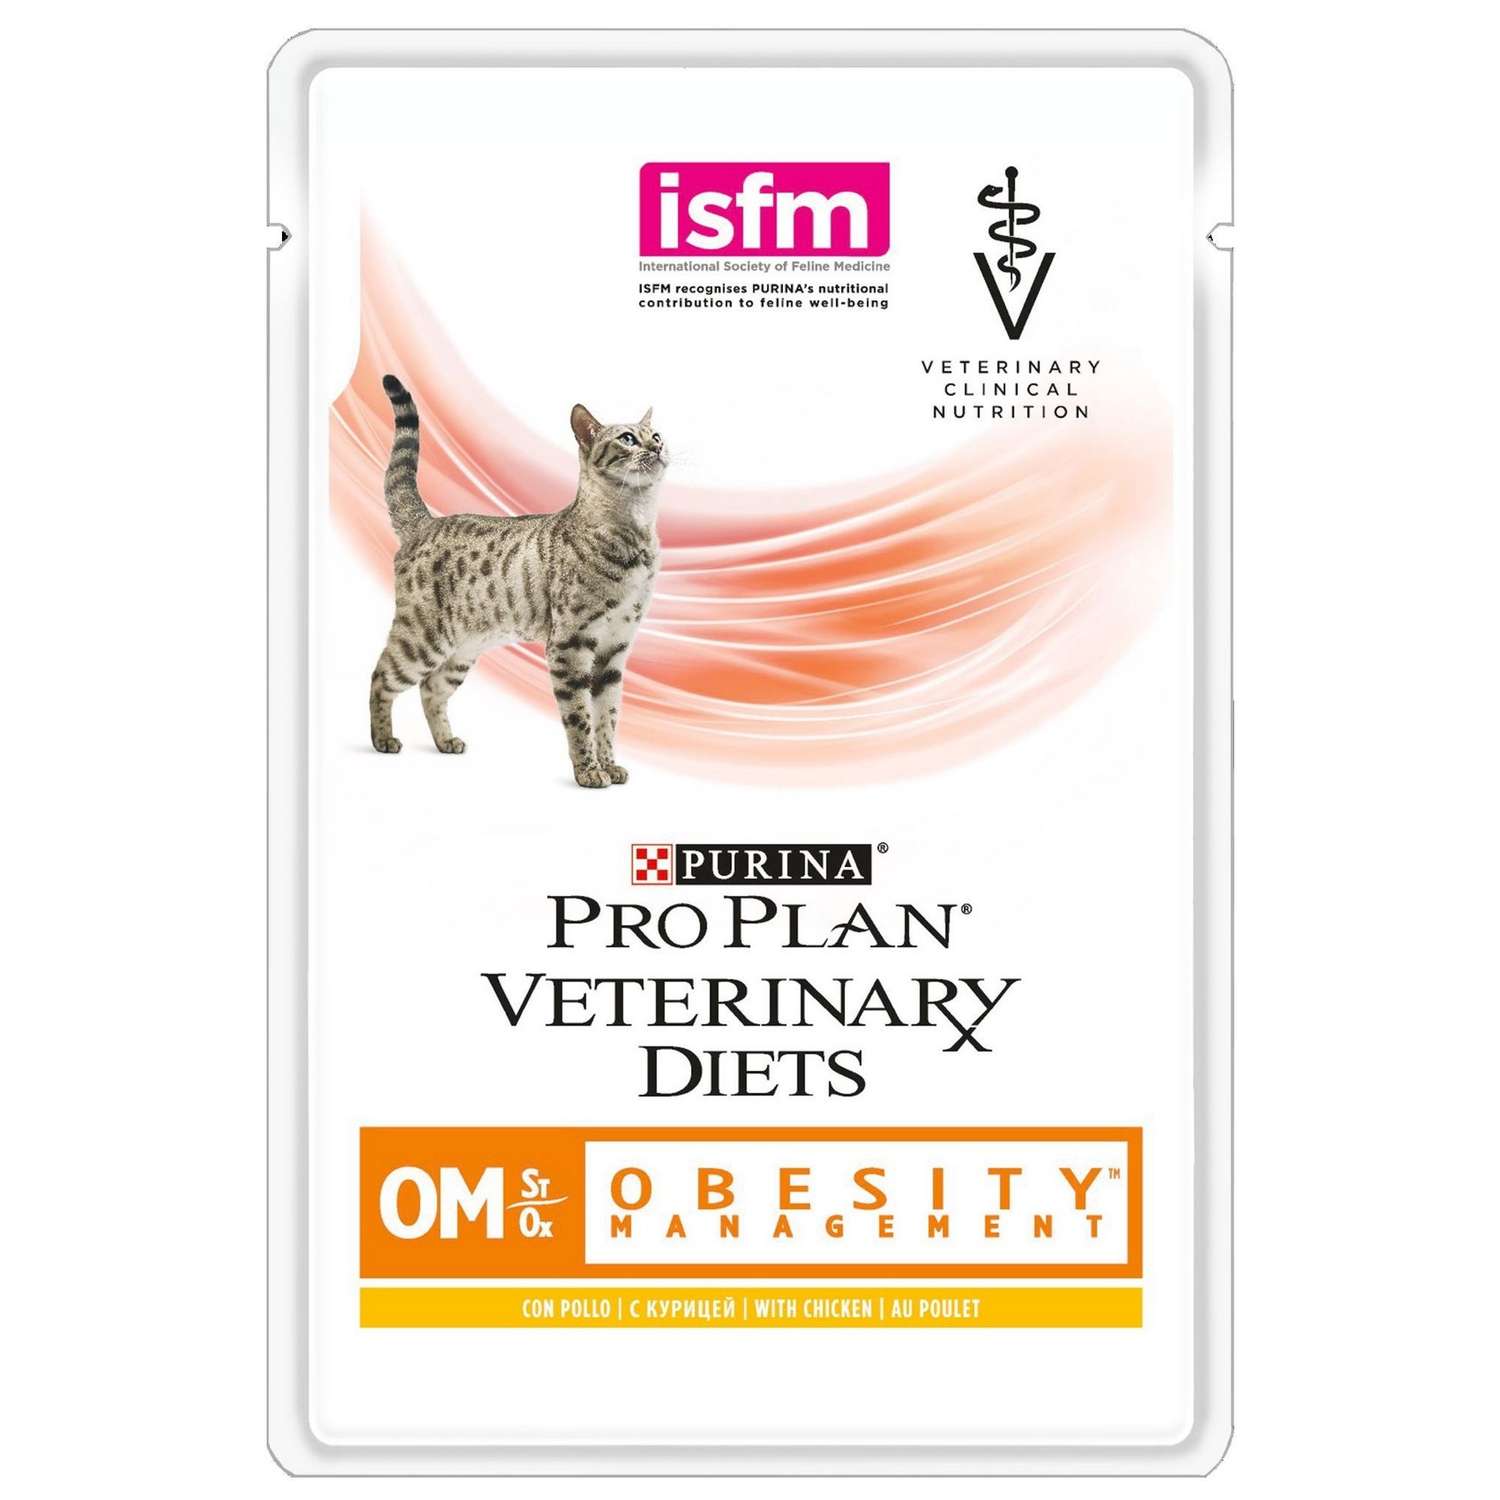 Корм для кошек Purina Pro Plan Veterinary diets Obesity Management курица 85г - фото 1